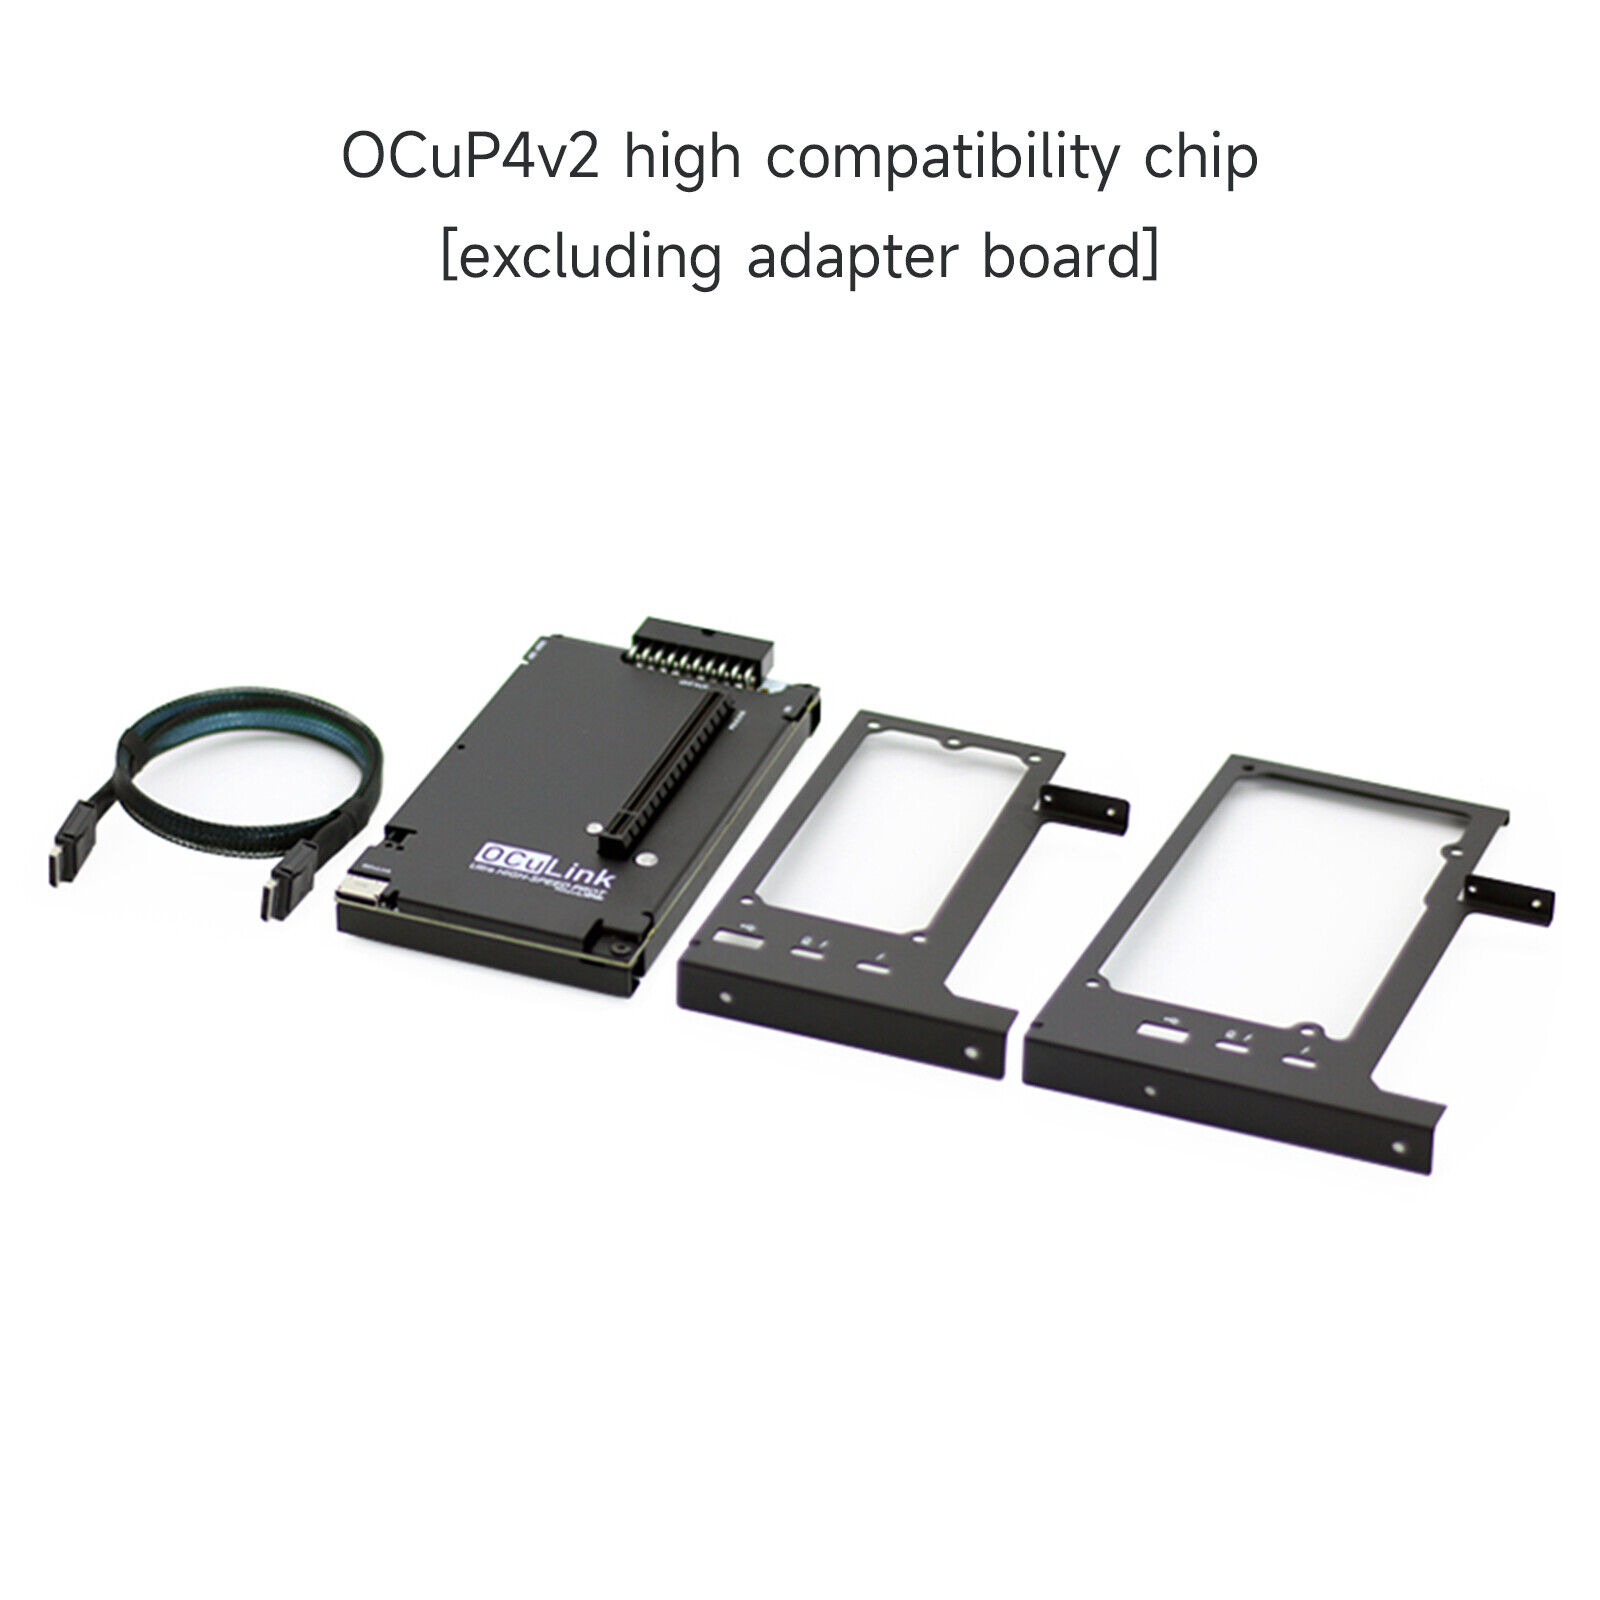 OCuLink External Graphics Card Expansion Dock OCuP4v2 High Compatibility Chip